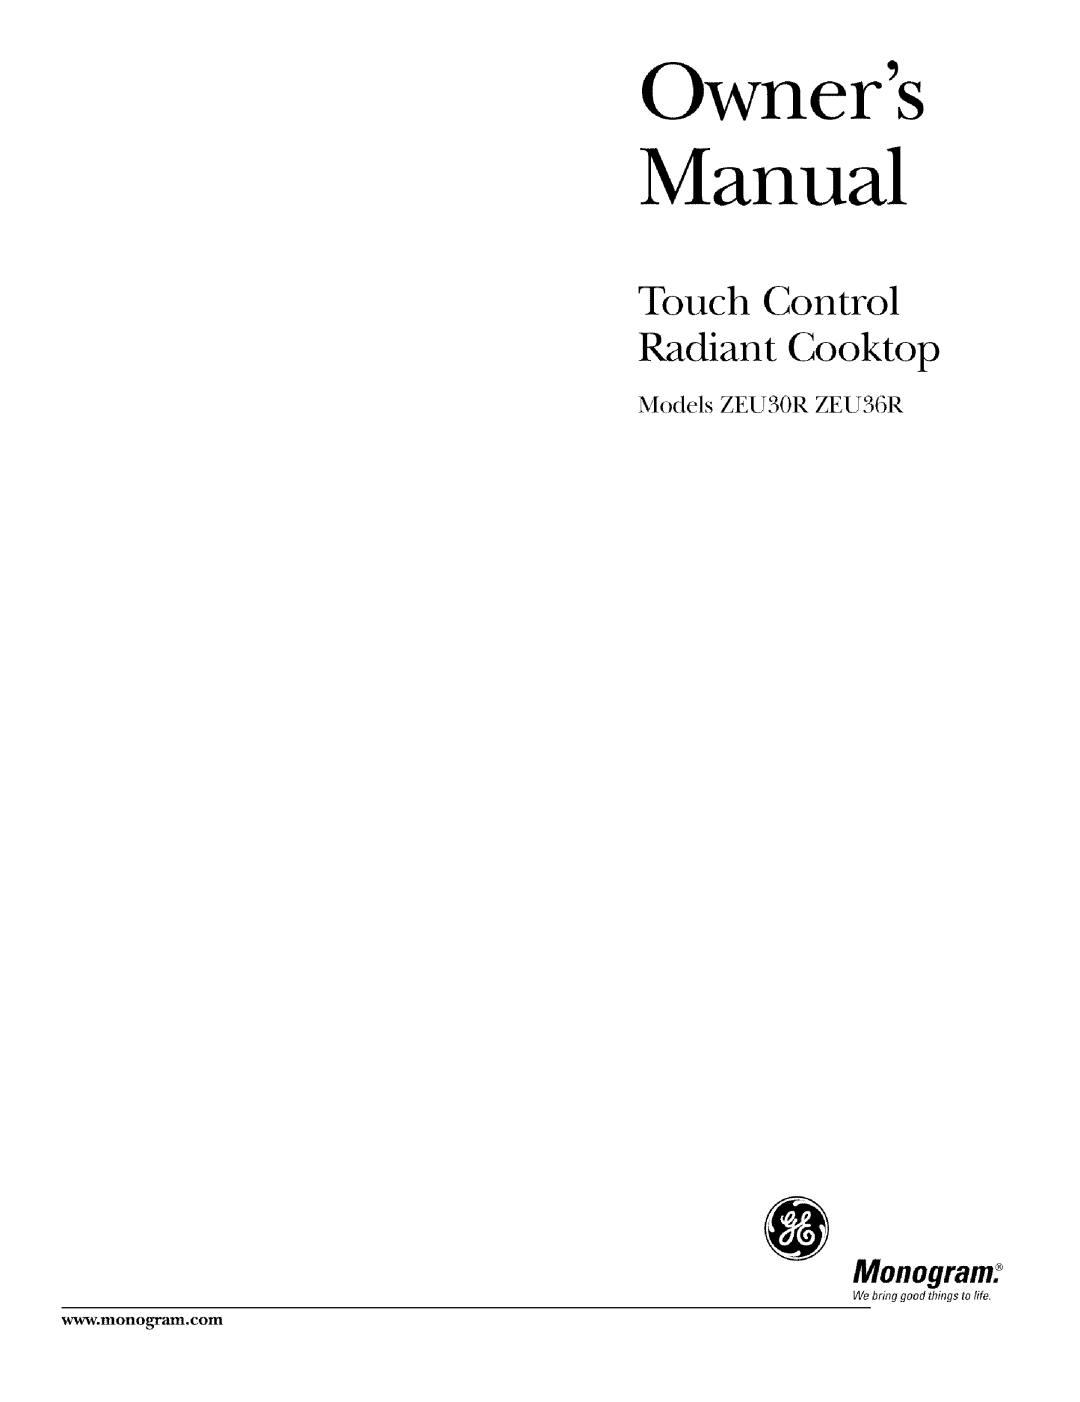 GE Monogram manual Manual, Touch Control, Models ZEU30R ZEU36R, OwneIS, Radiant Cooktop, Monogram, Webfinggood ingstoti 